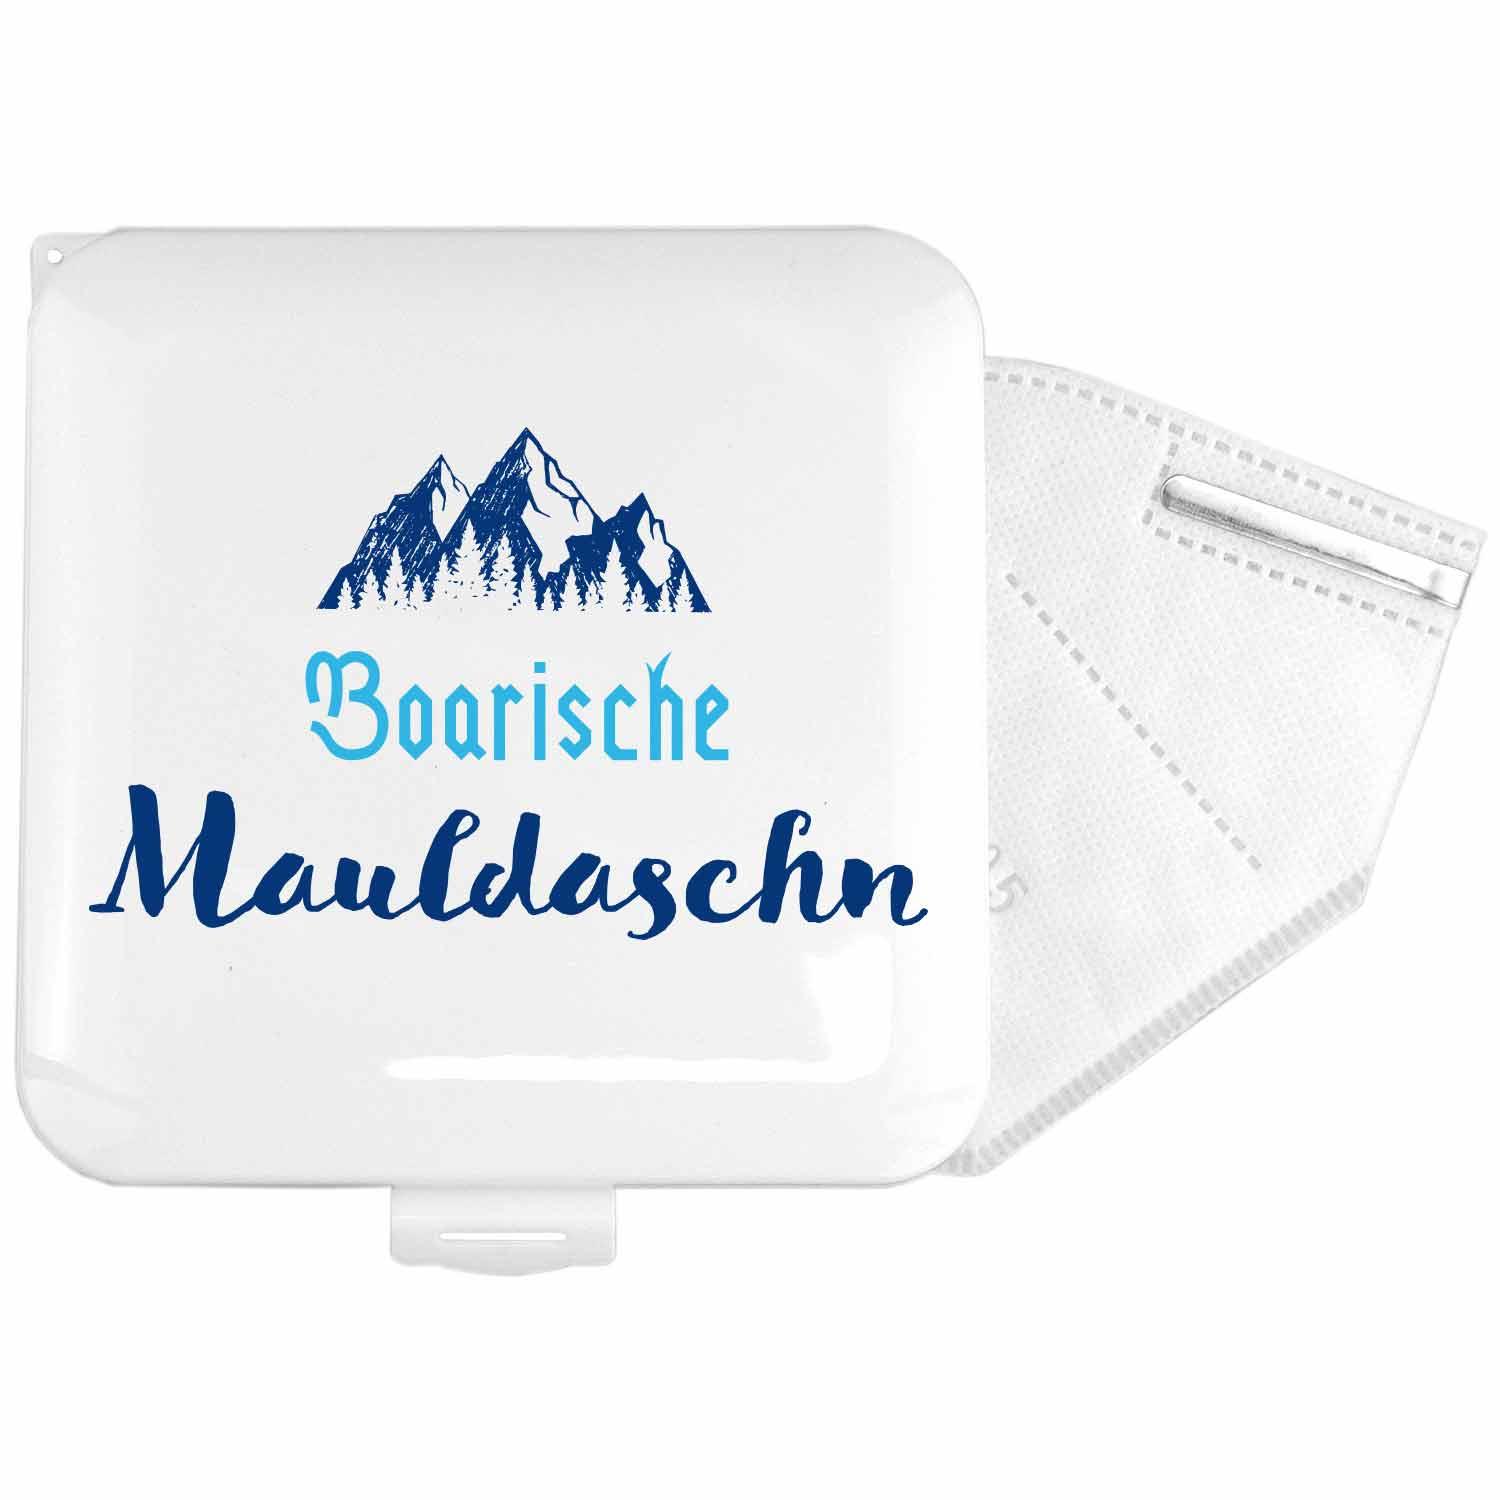 Maskenbox "Mauldaschn" - bavariashop - mei LebensGfui